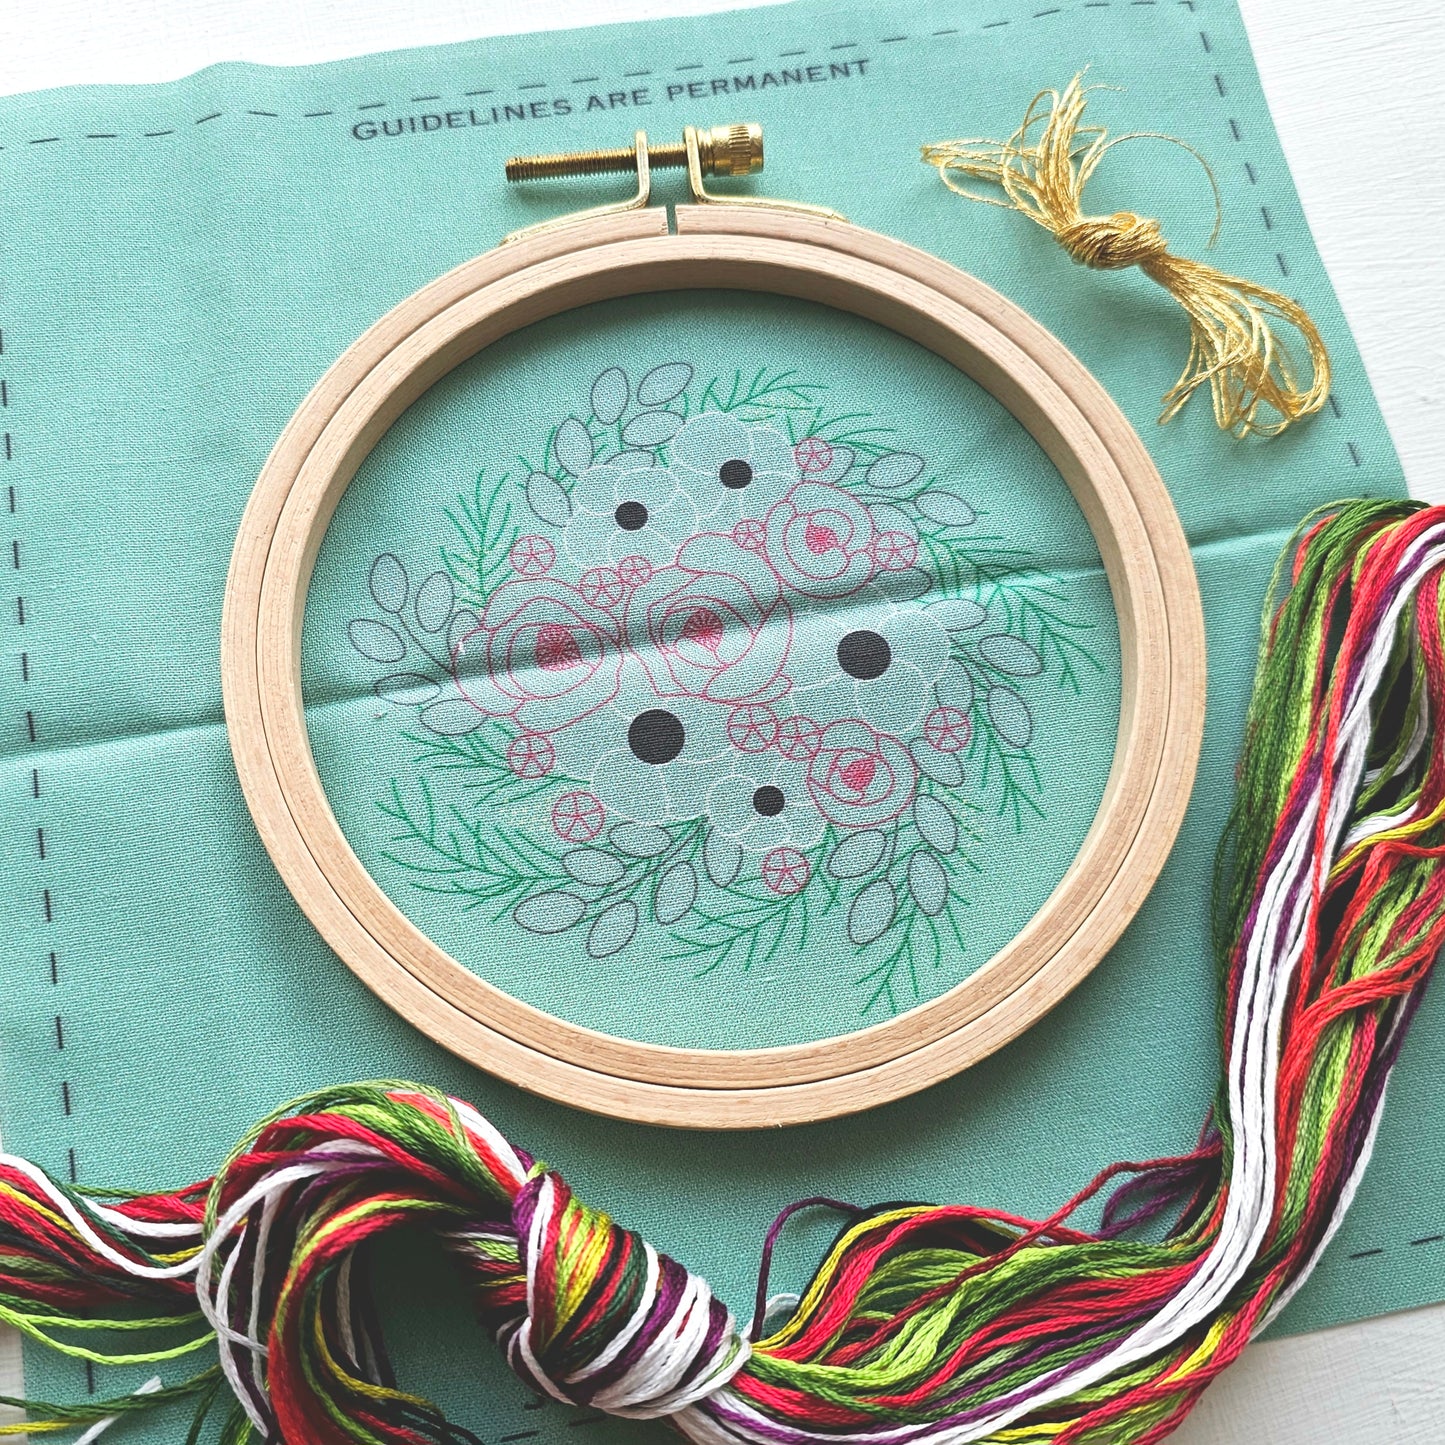 Festive Flora Embroidery Kit